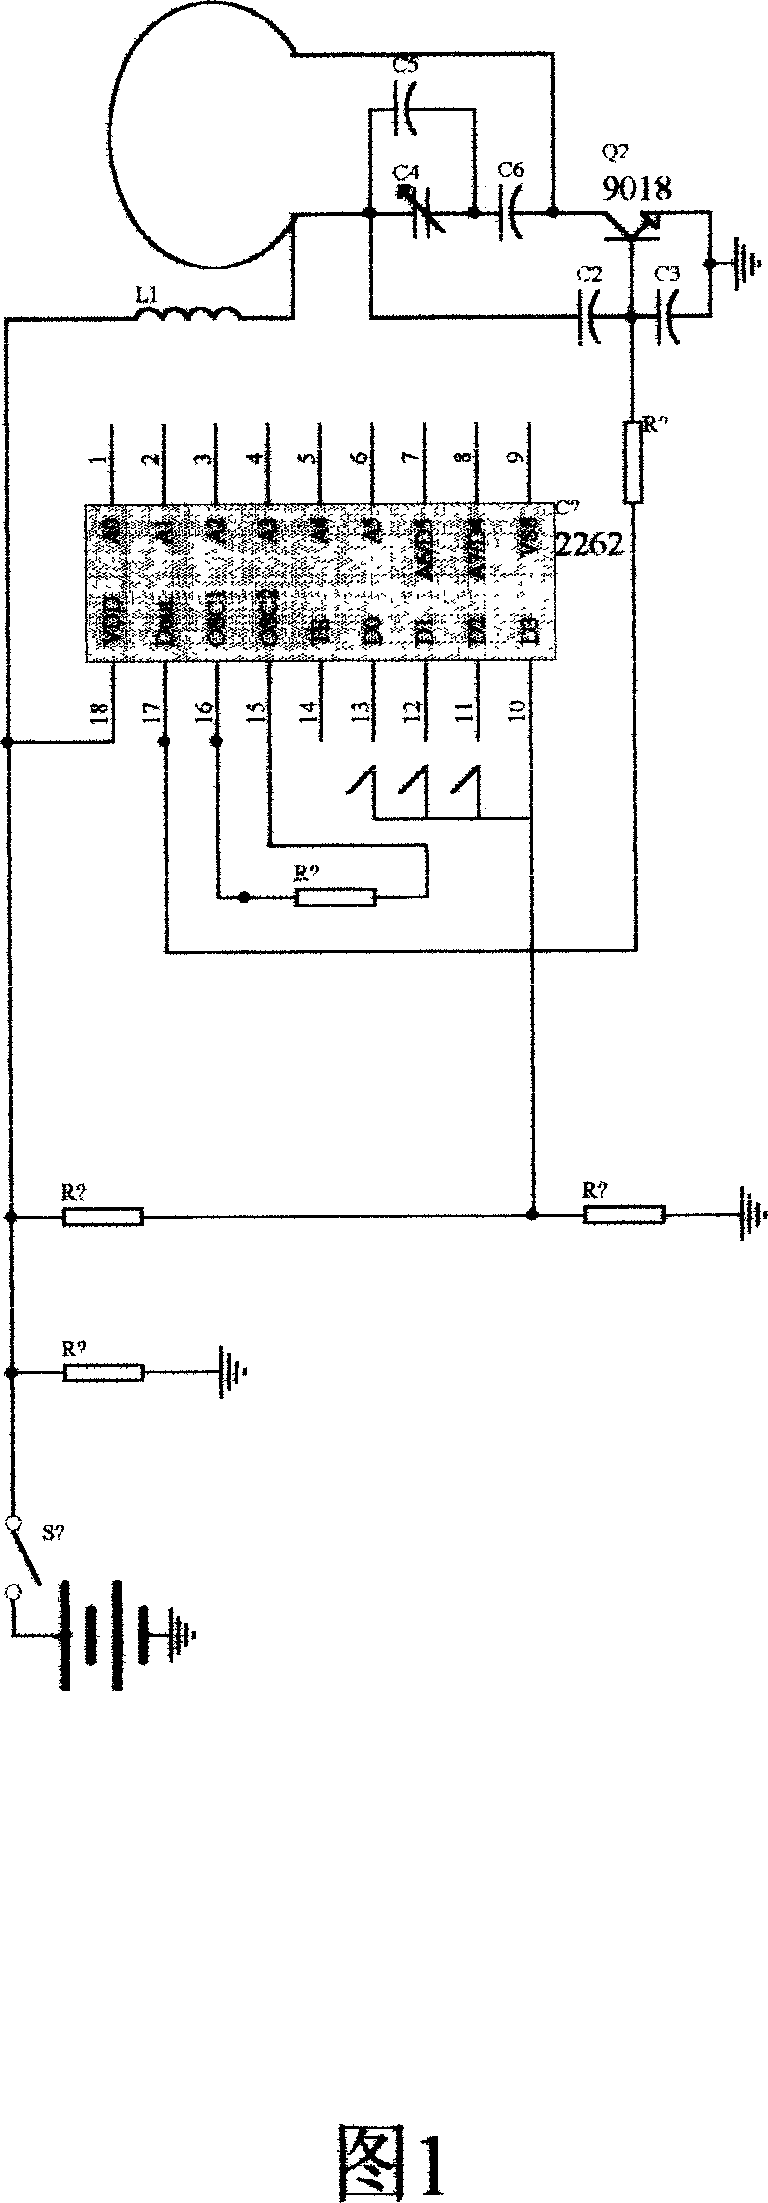 Bidirectional transmission converter